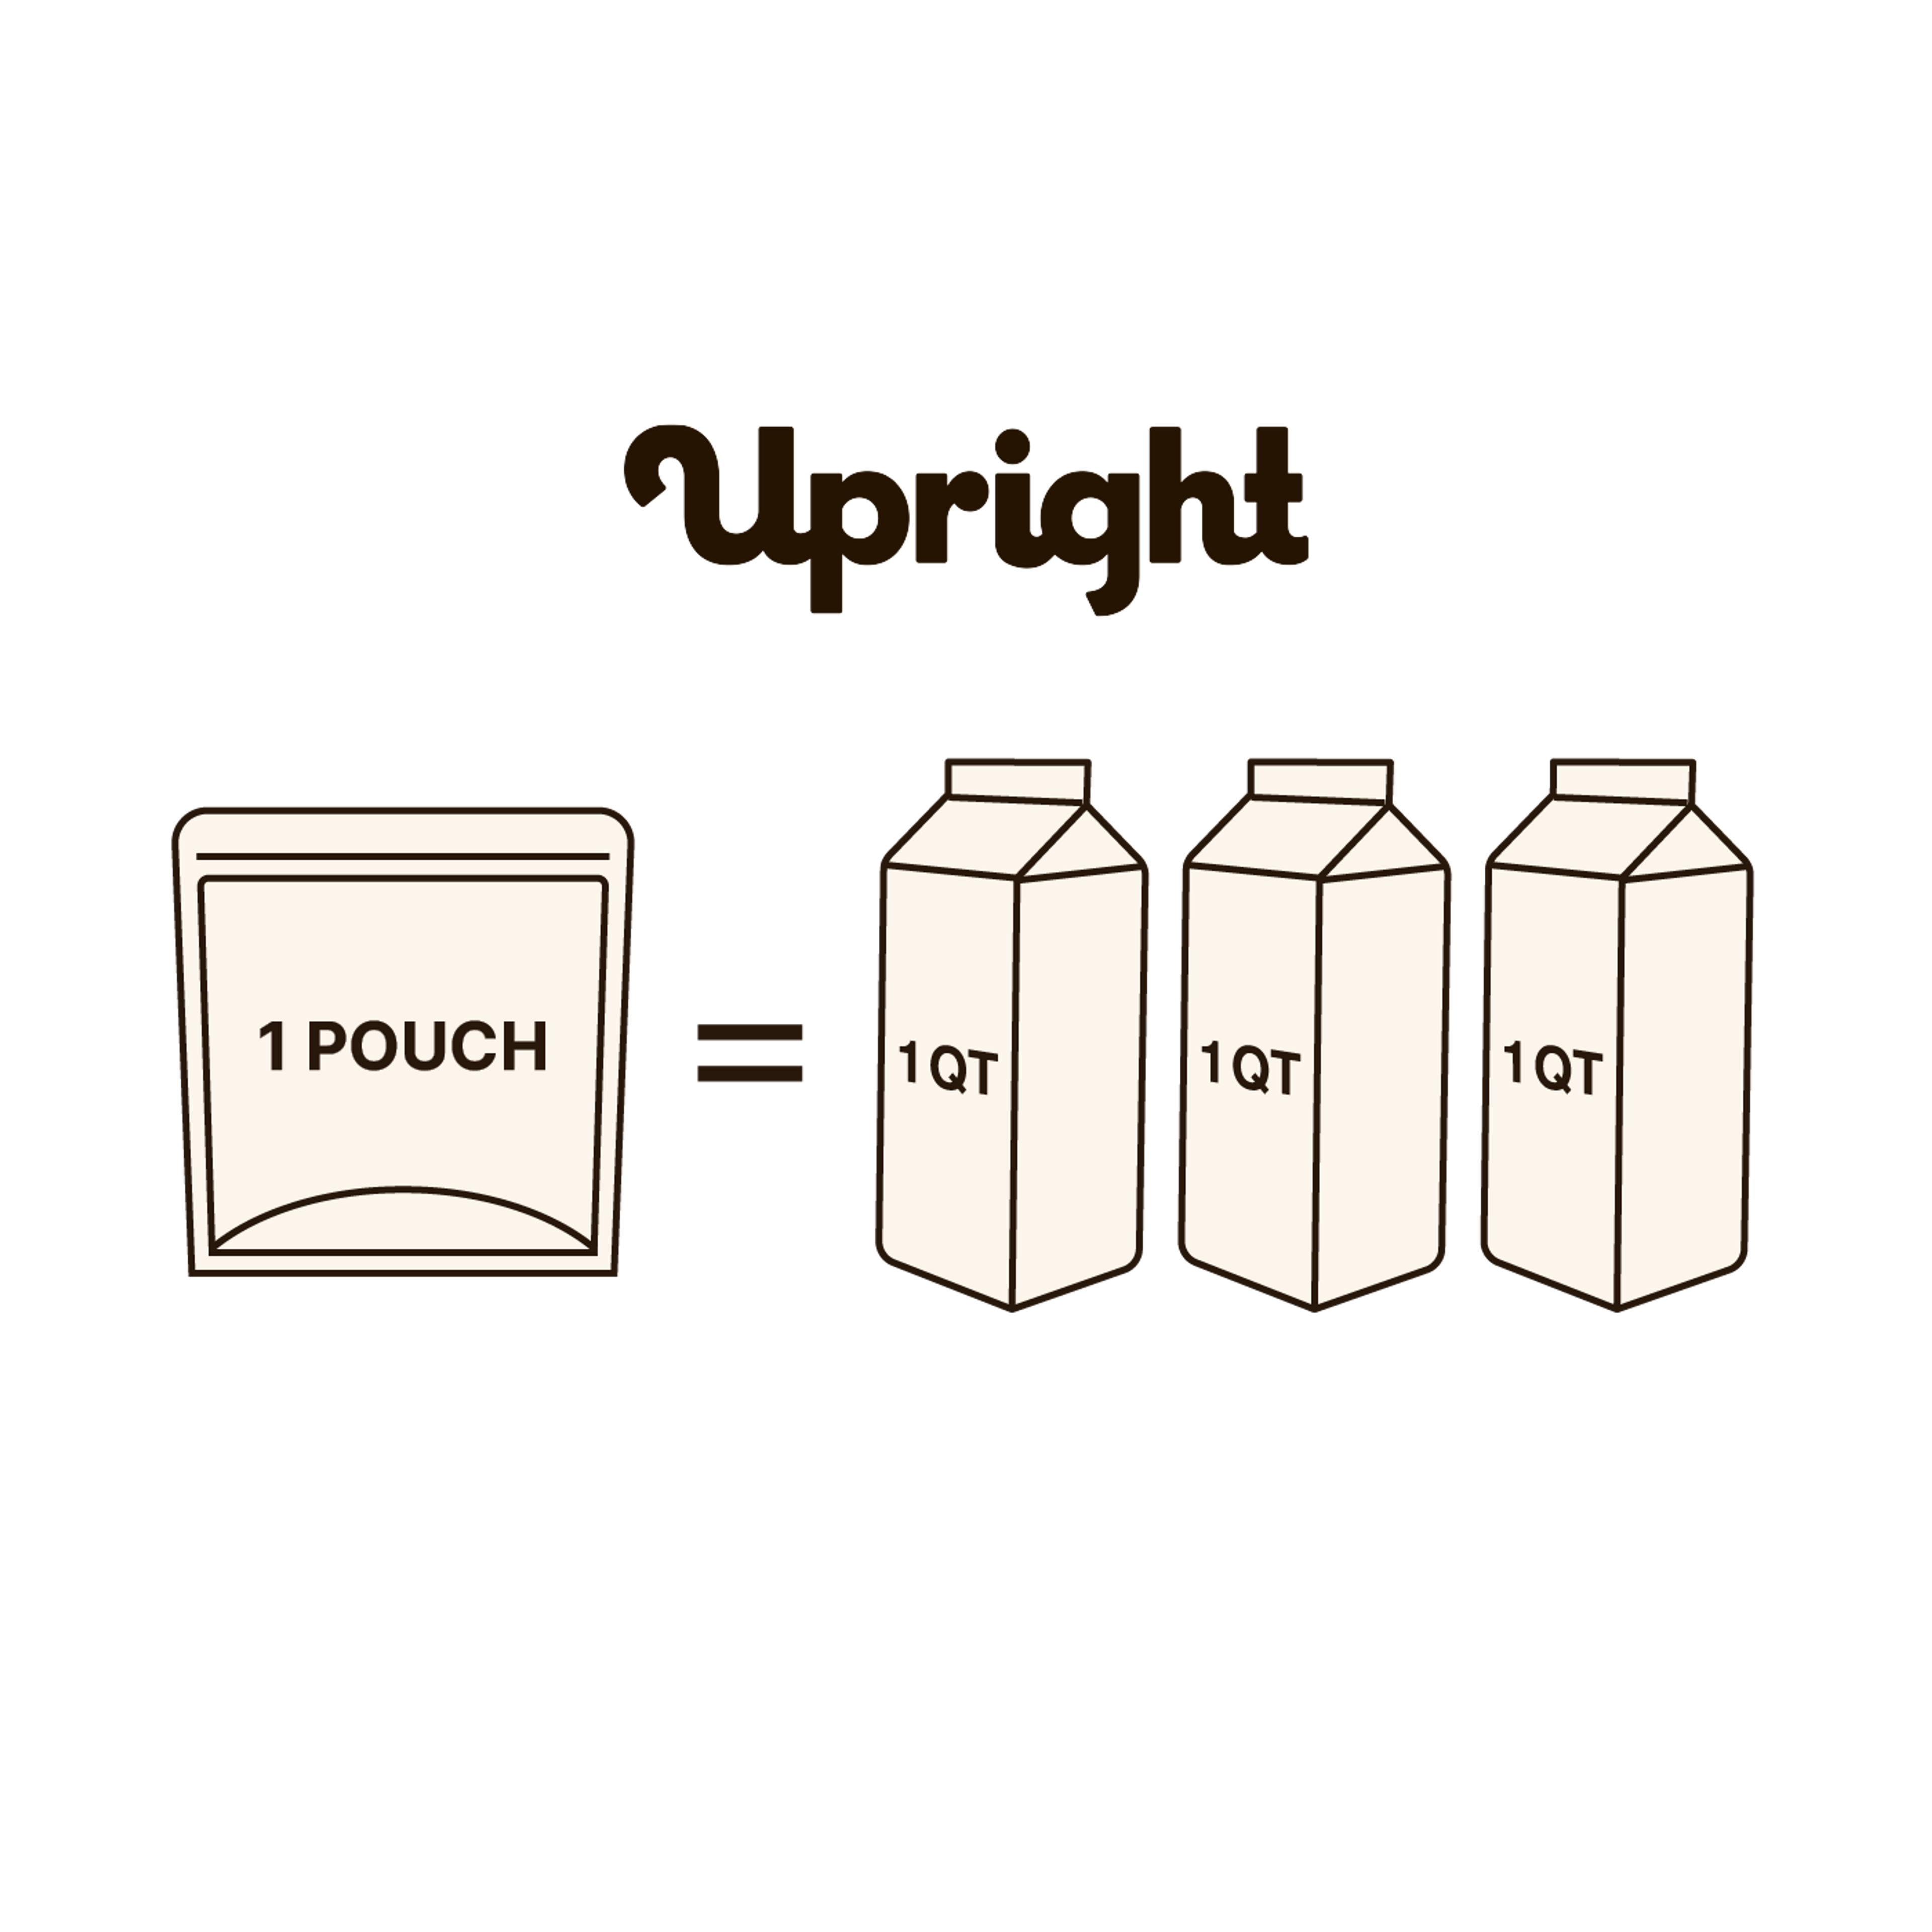 High-Protein Instant Oatmilk - Original Unsweetened (Bulk Format)